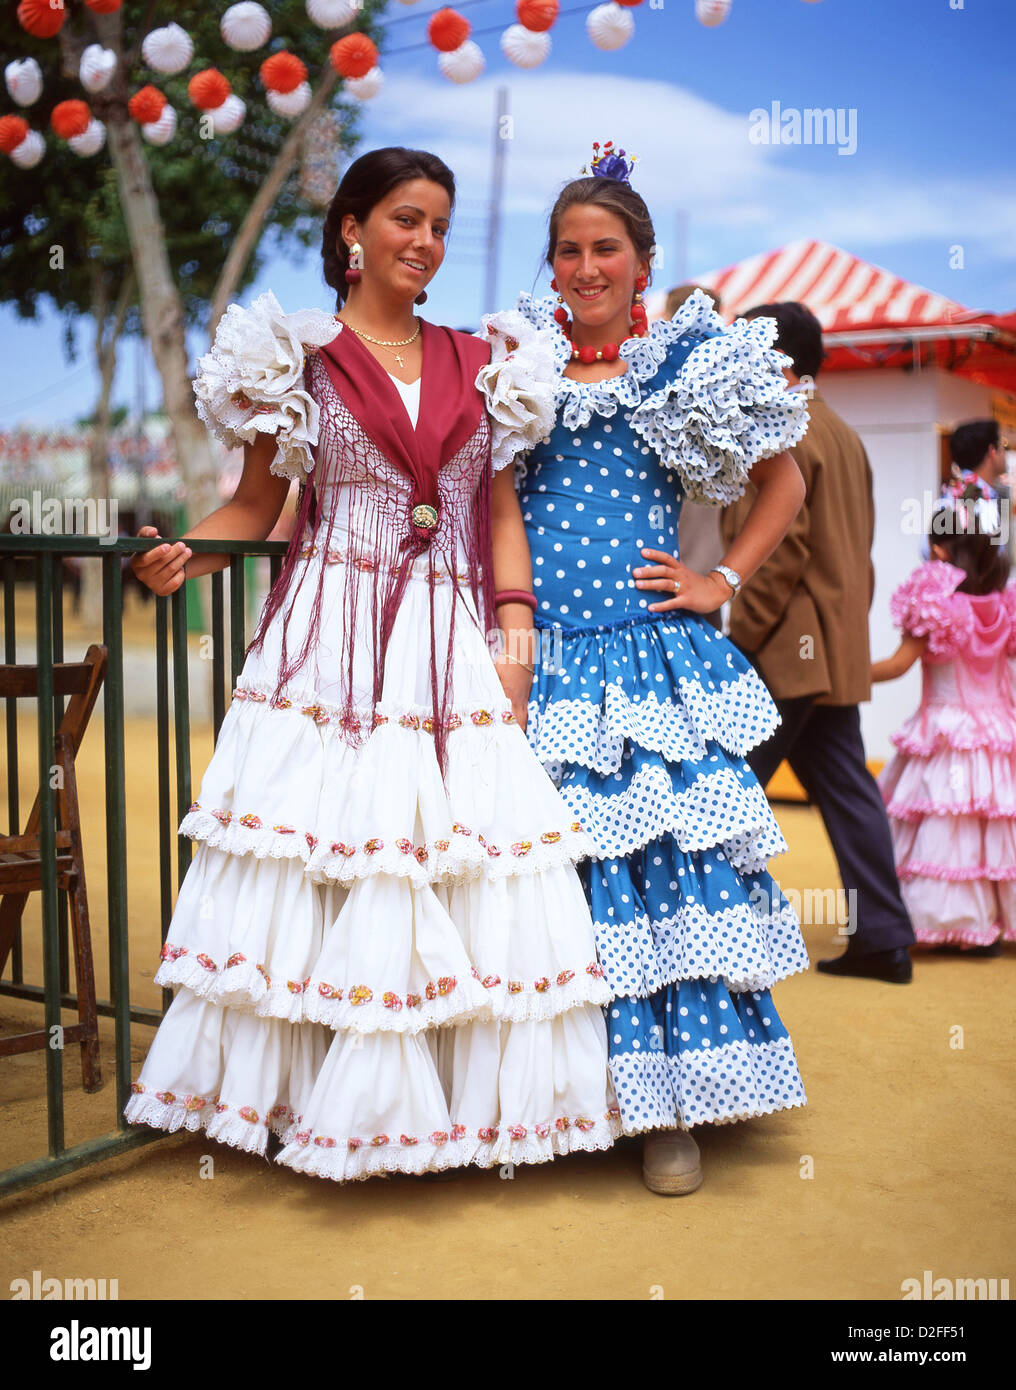 Junge Frauen im Flamenco Kleider auf der Feria de Abril de Sevilla (Sevilla  April Fair), Sevilla, Provinz Sevilla, Andalusien, Spanien Stockfotografie  - Alamy